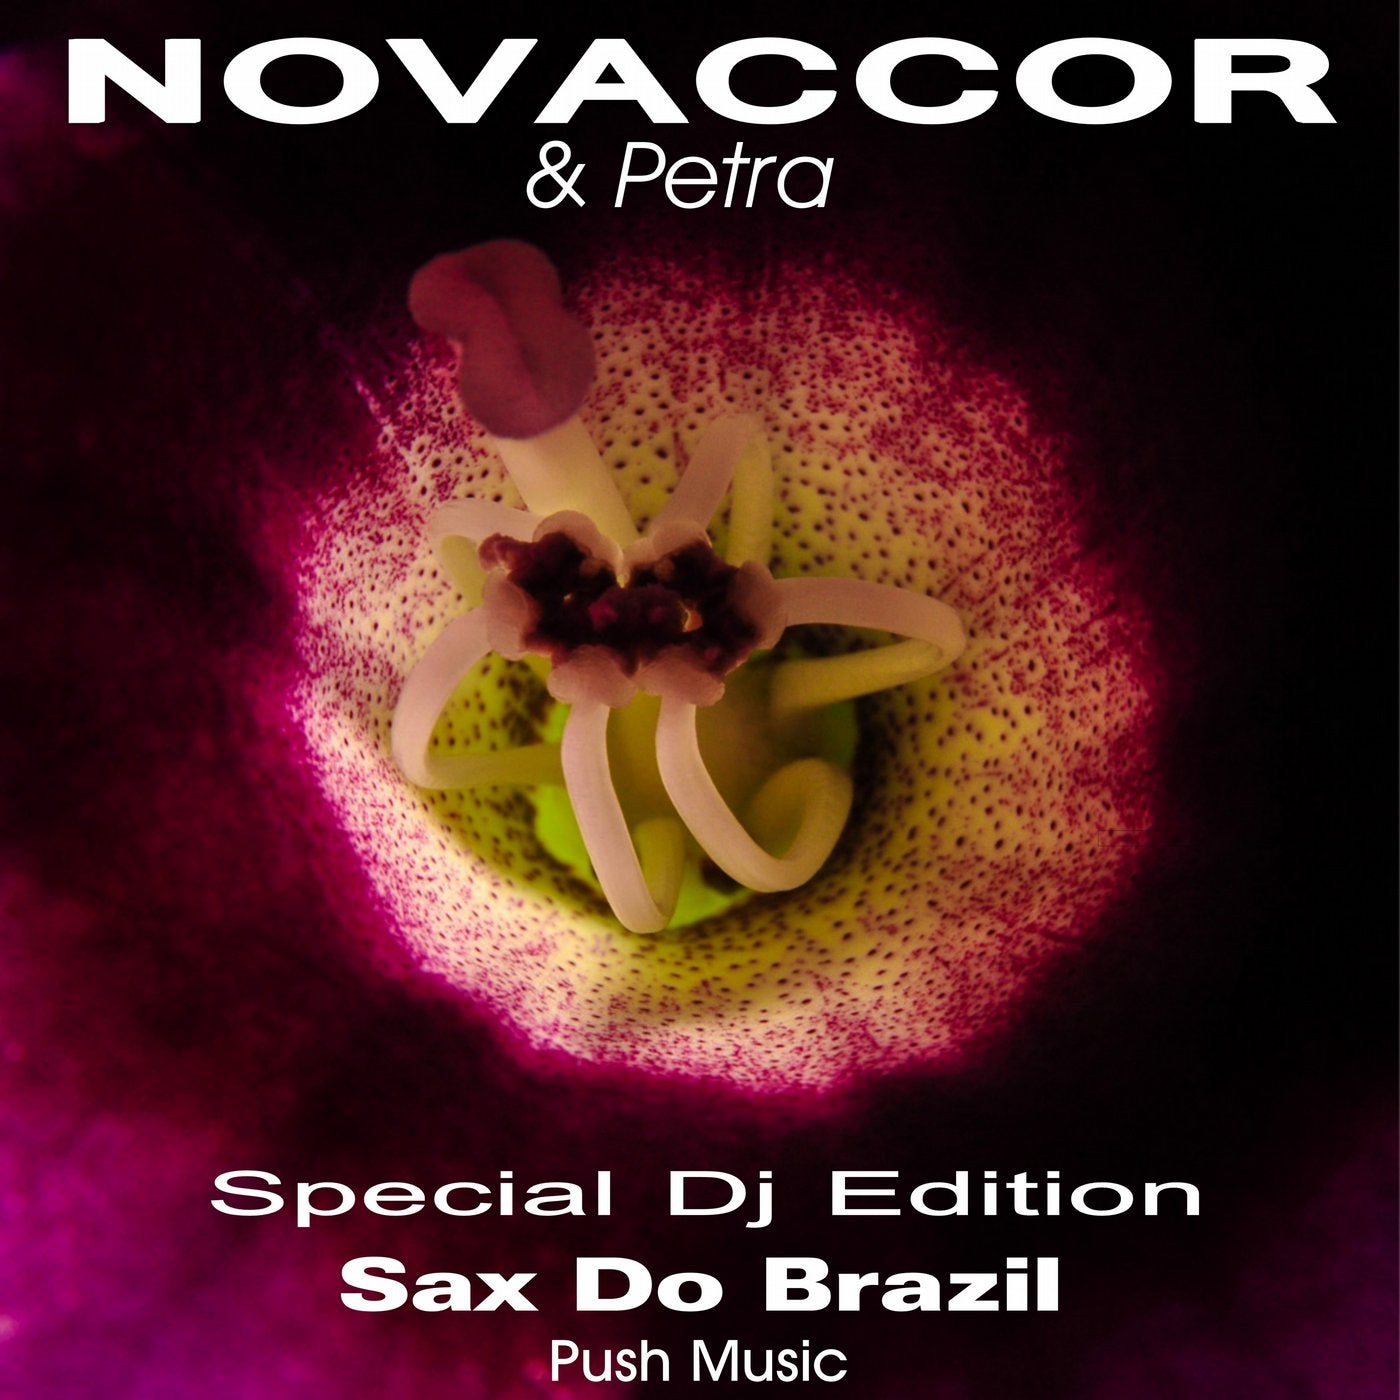 Sax Do Brazil(Special DJ Edition)